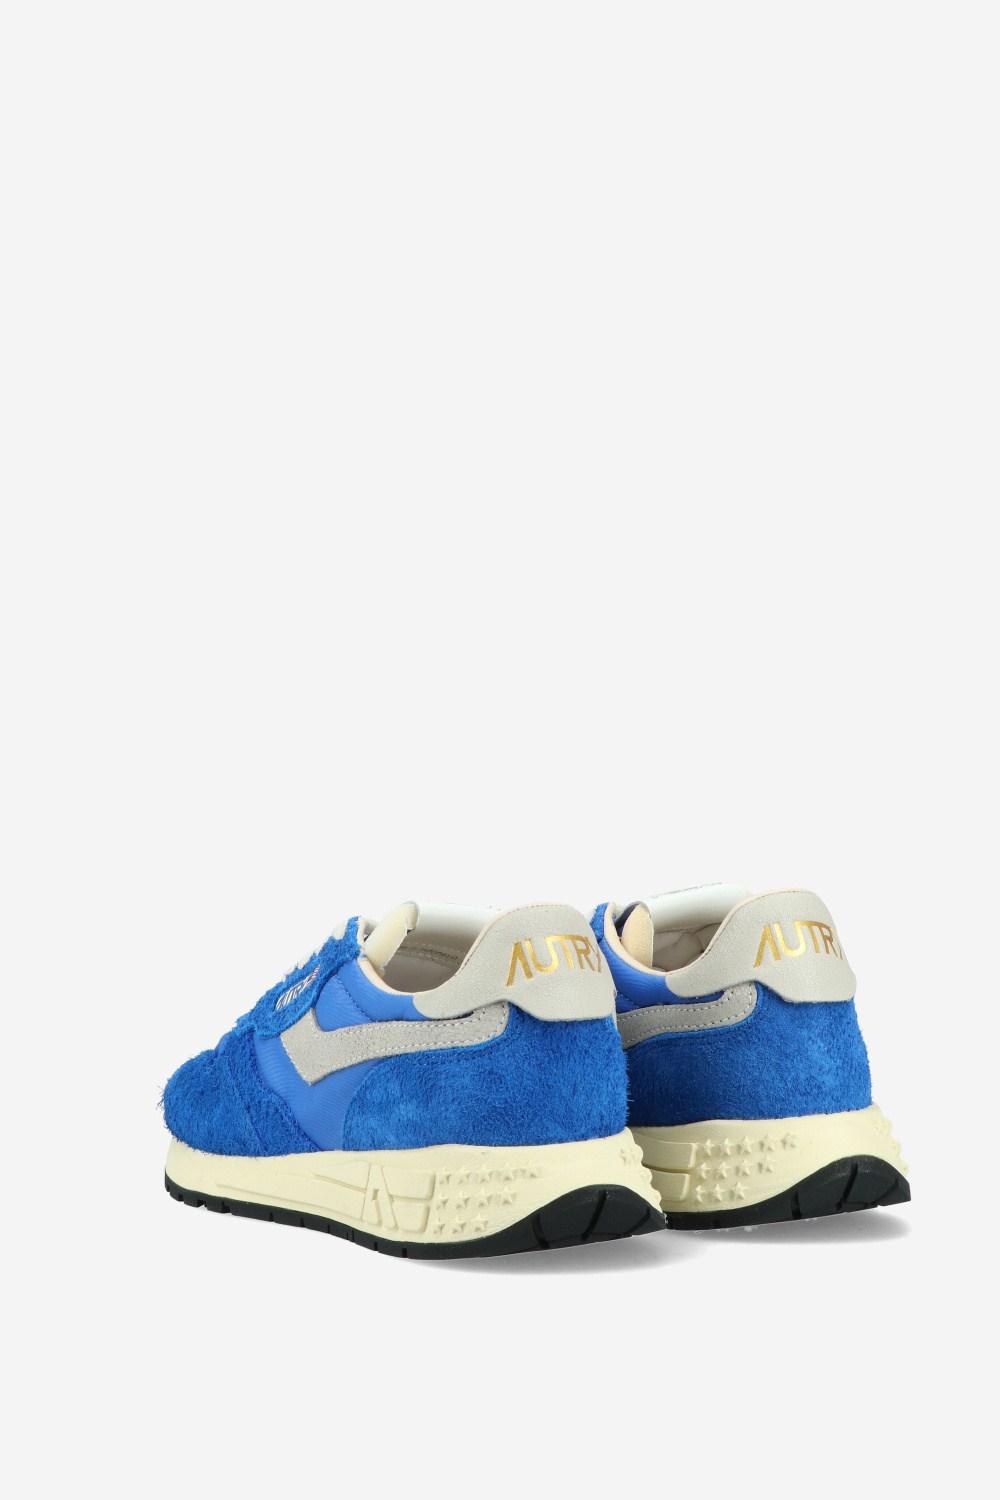 Autry Sneakers Blauw